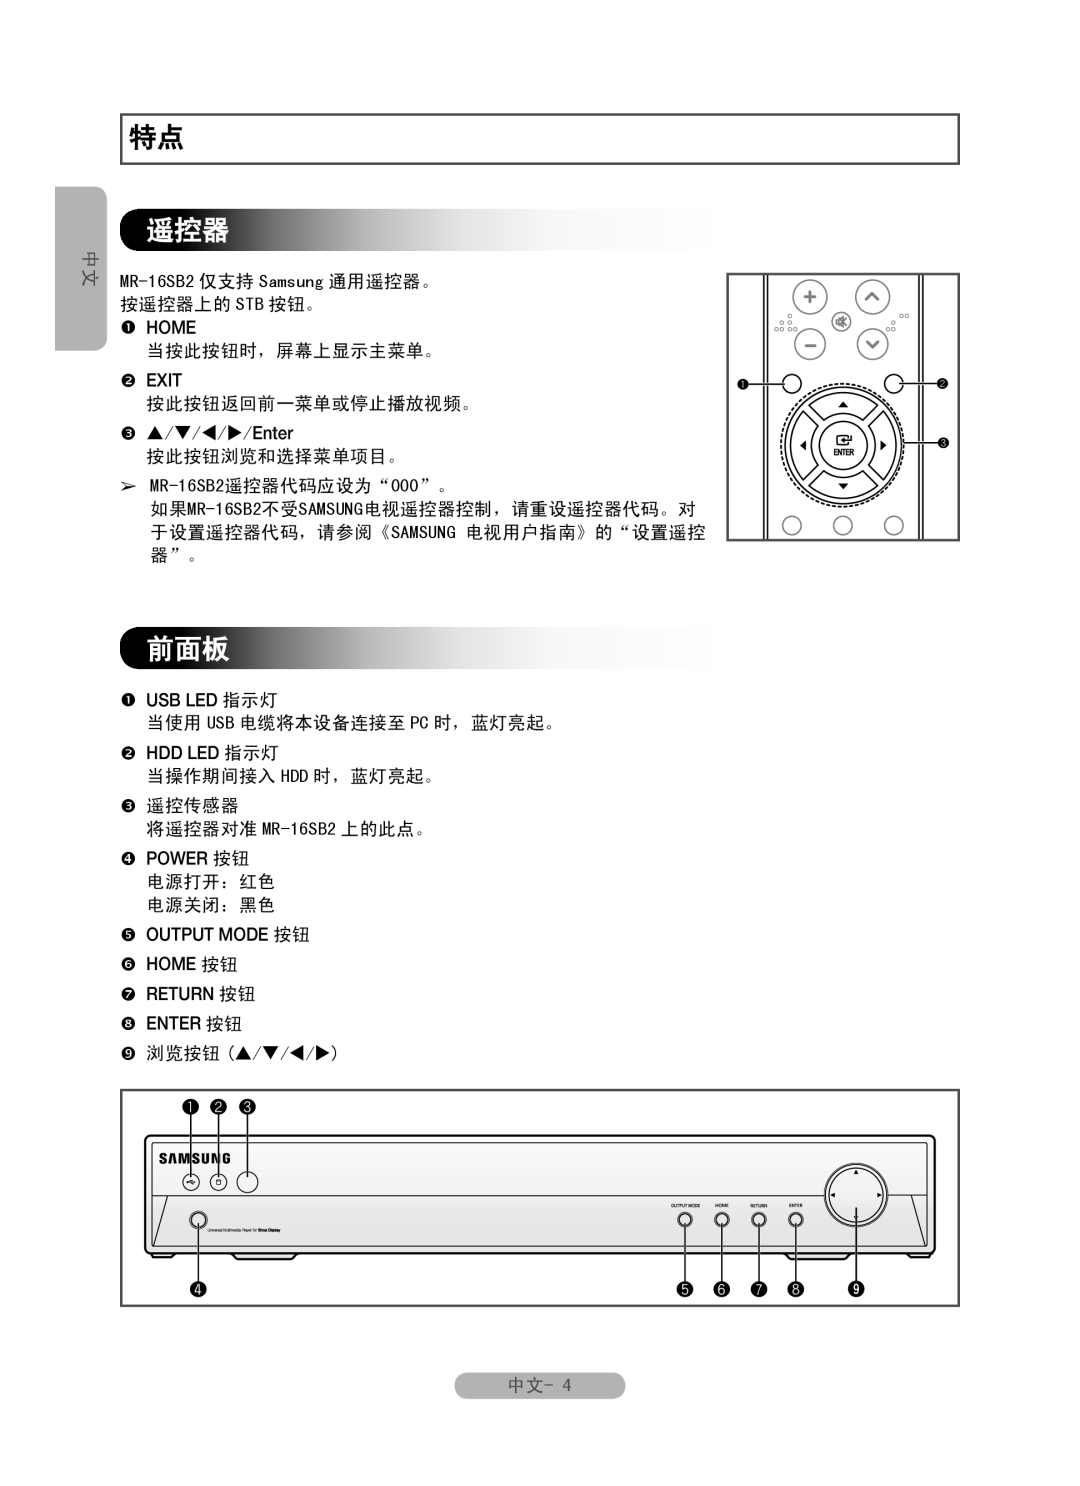 Samsung manual MR-16SB2 仅支持 Samsung 通用遥控器。,  Home,  Exit,  ////Enter, MR-16SB2遥控器代码应设为“000”。,  Usb Led 指示灯 